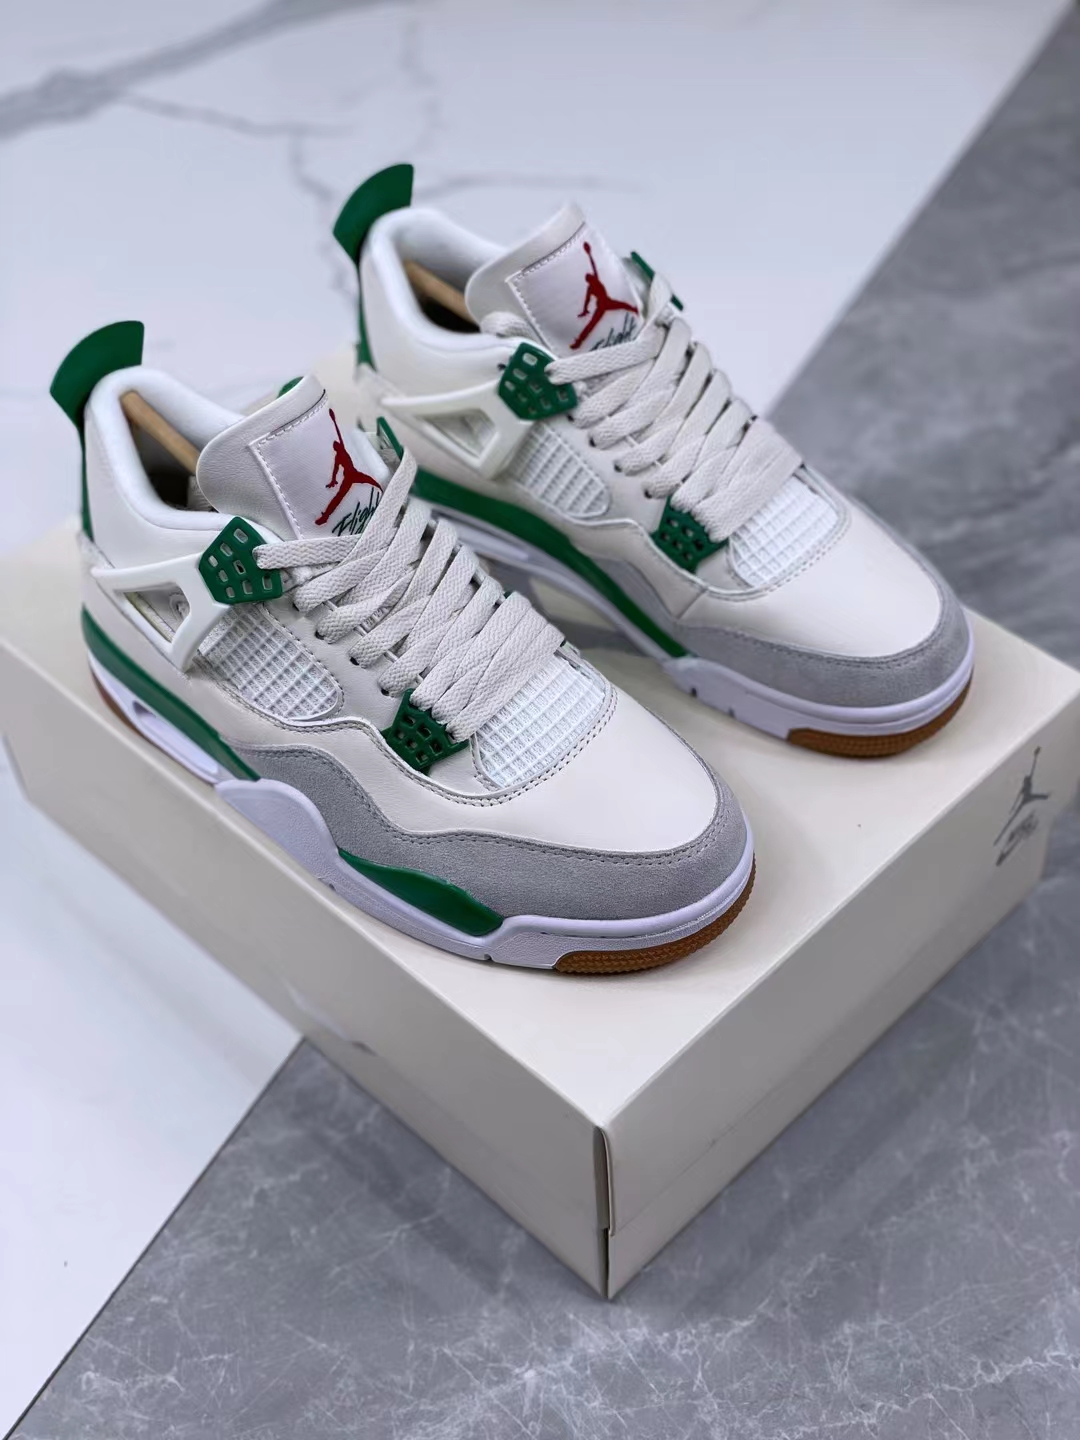 Men's Running weapon Air Jordan 4 Shoes Green/White 0140